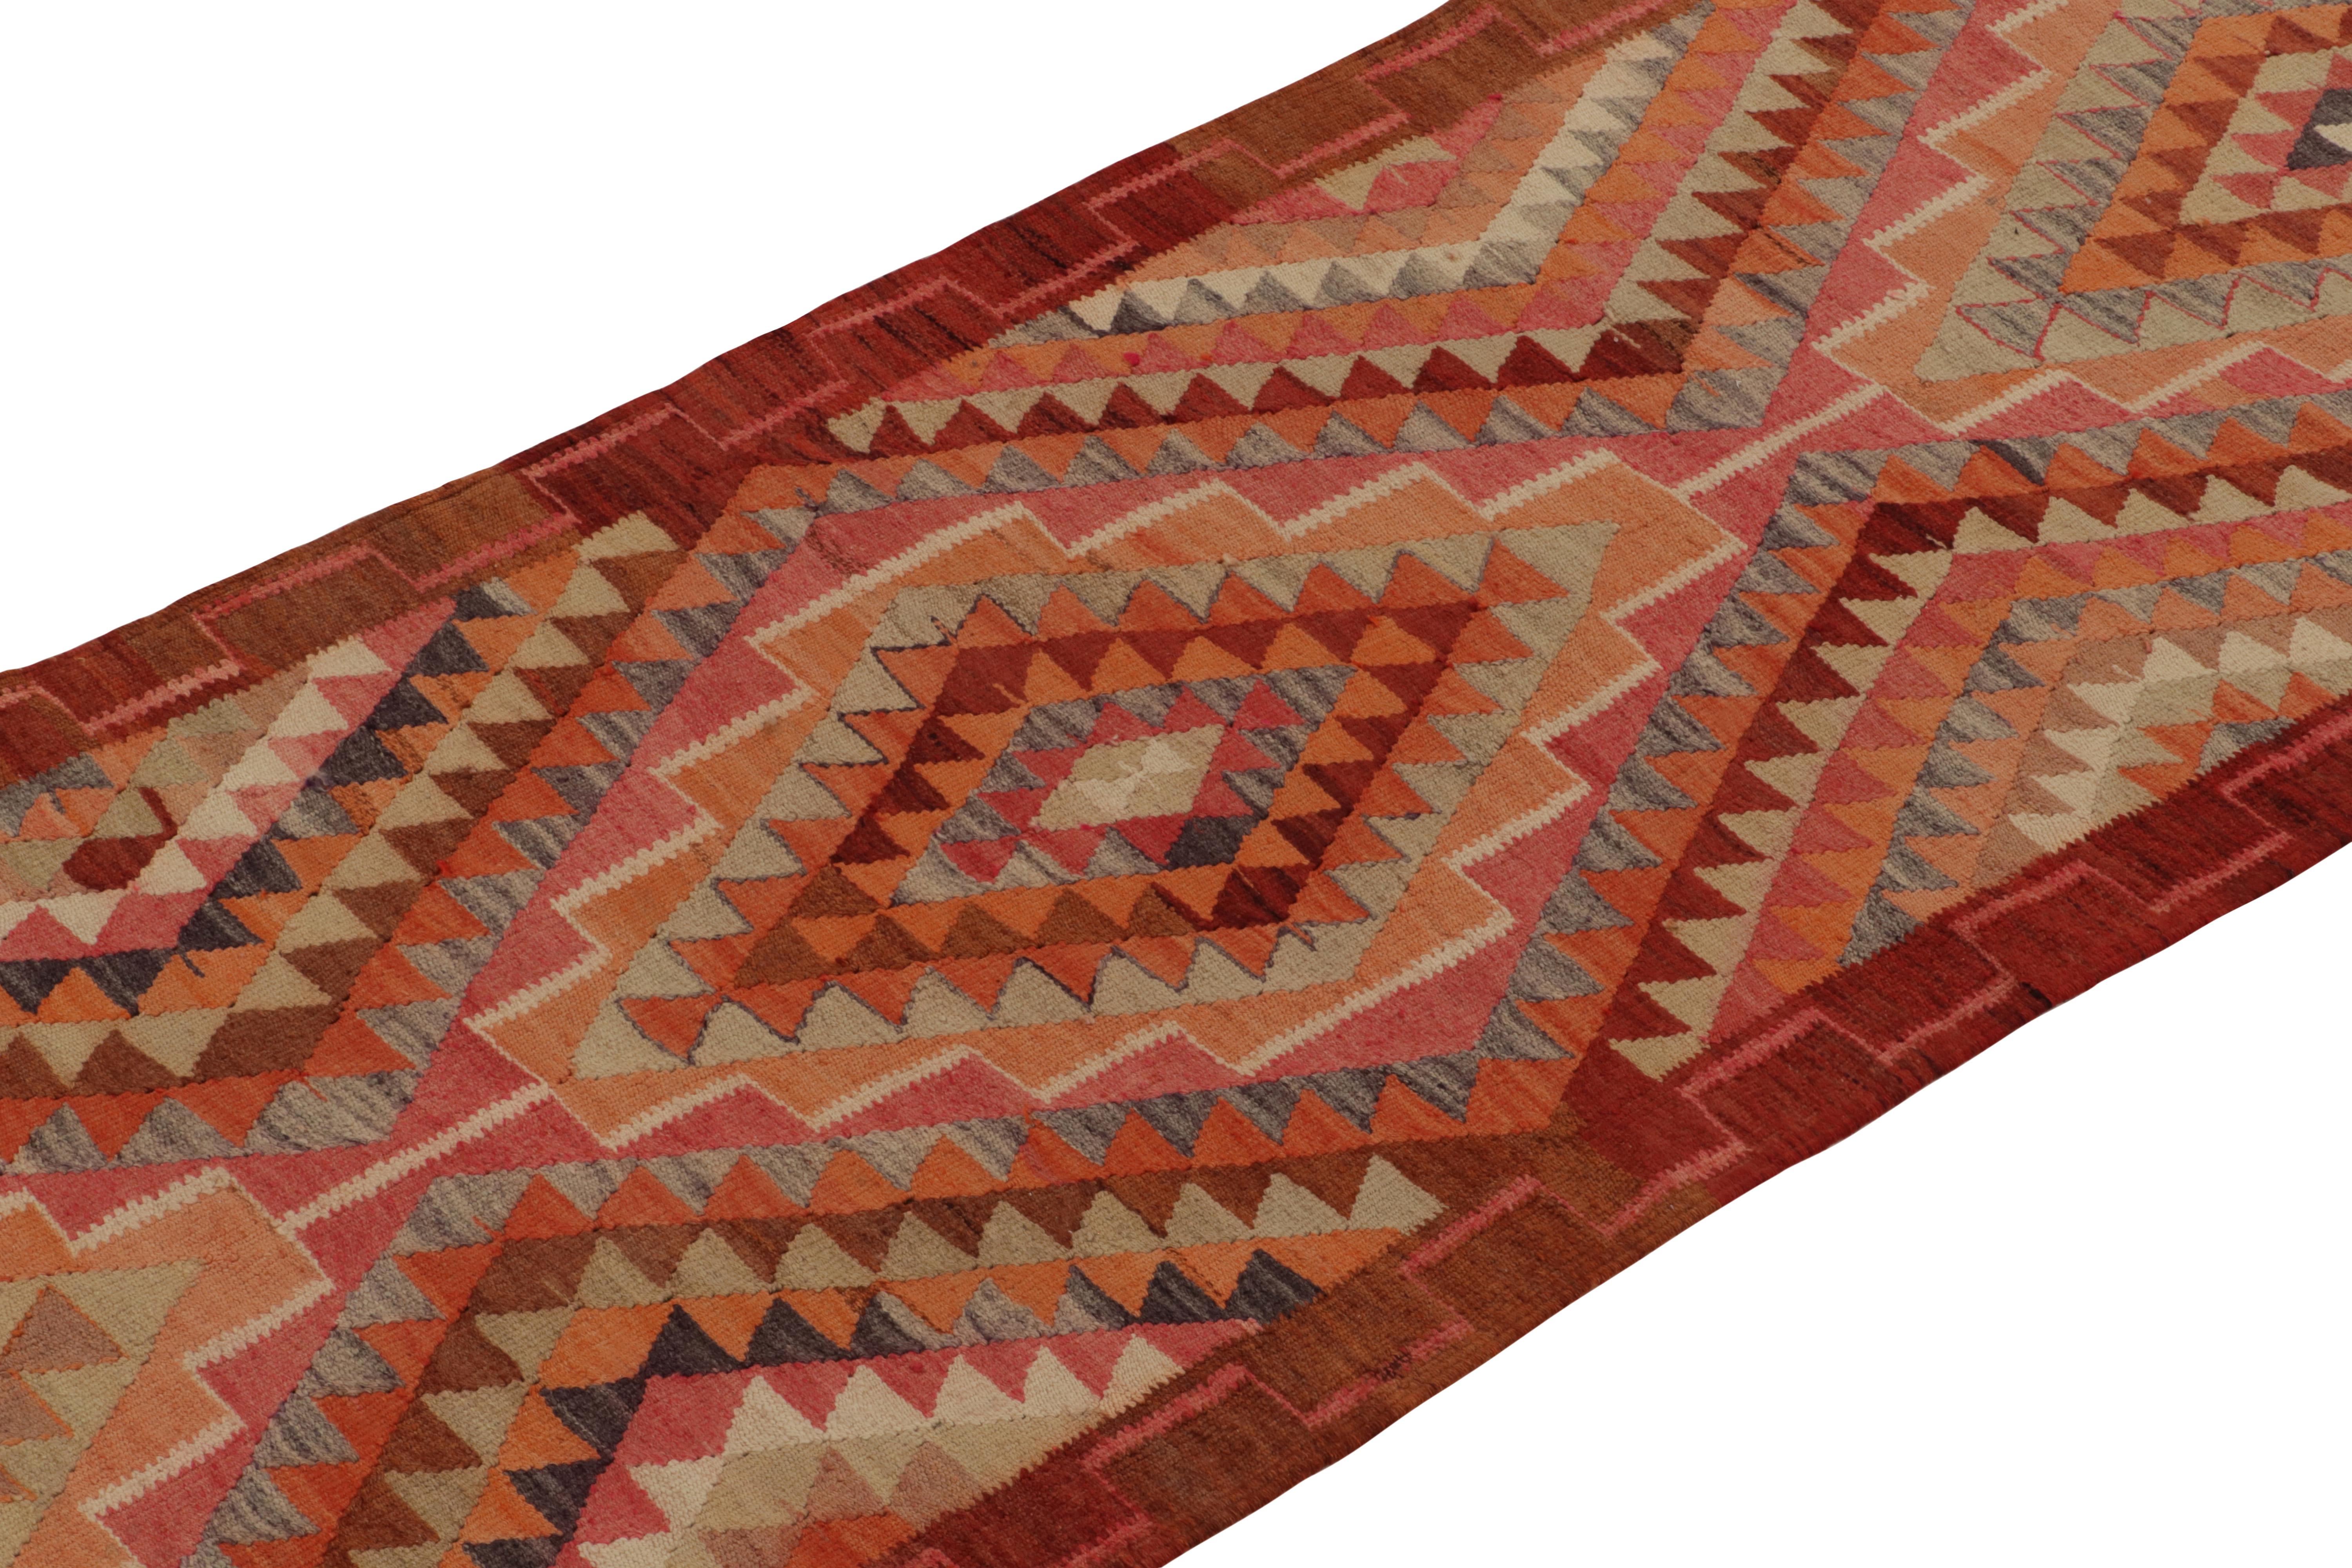 Hand-Knotted Vintage Tribal Kilim Runner in Red Brown Orange Geometric Pattern by Rug & Kilim For Sale